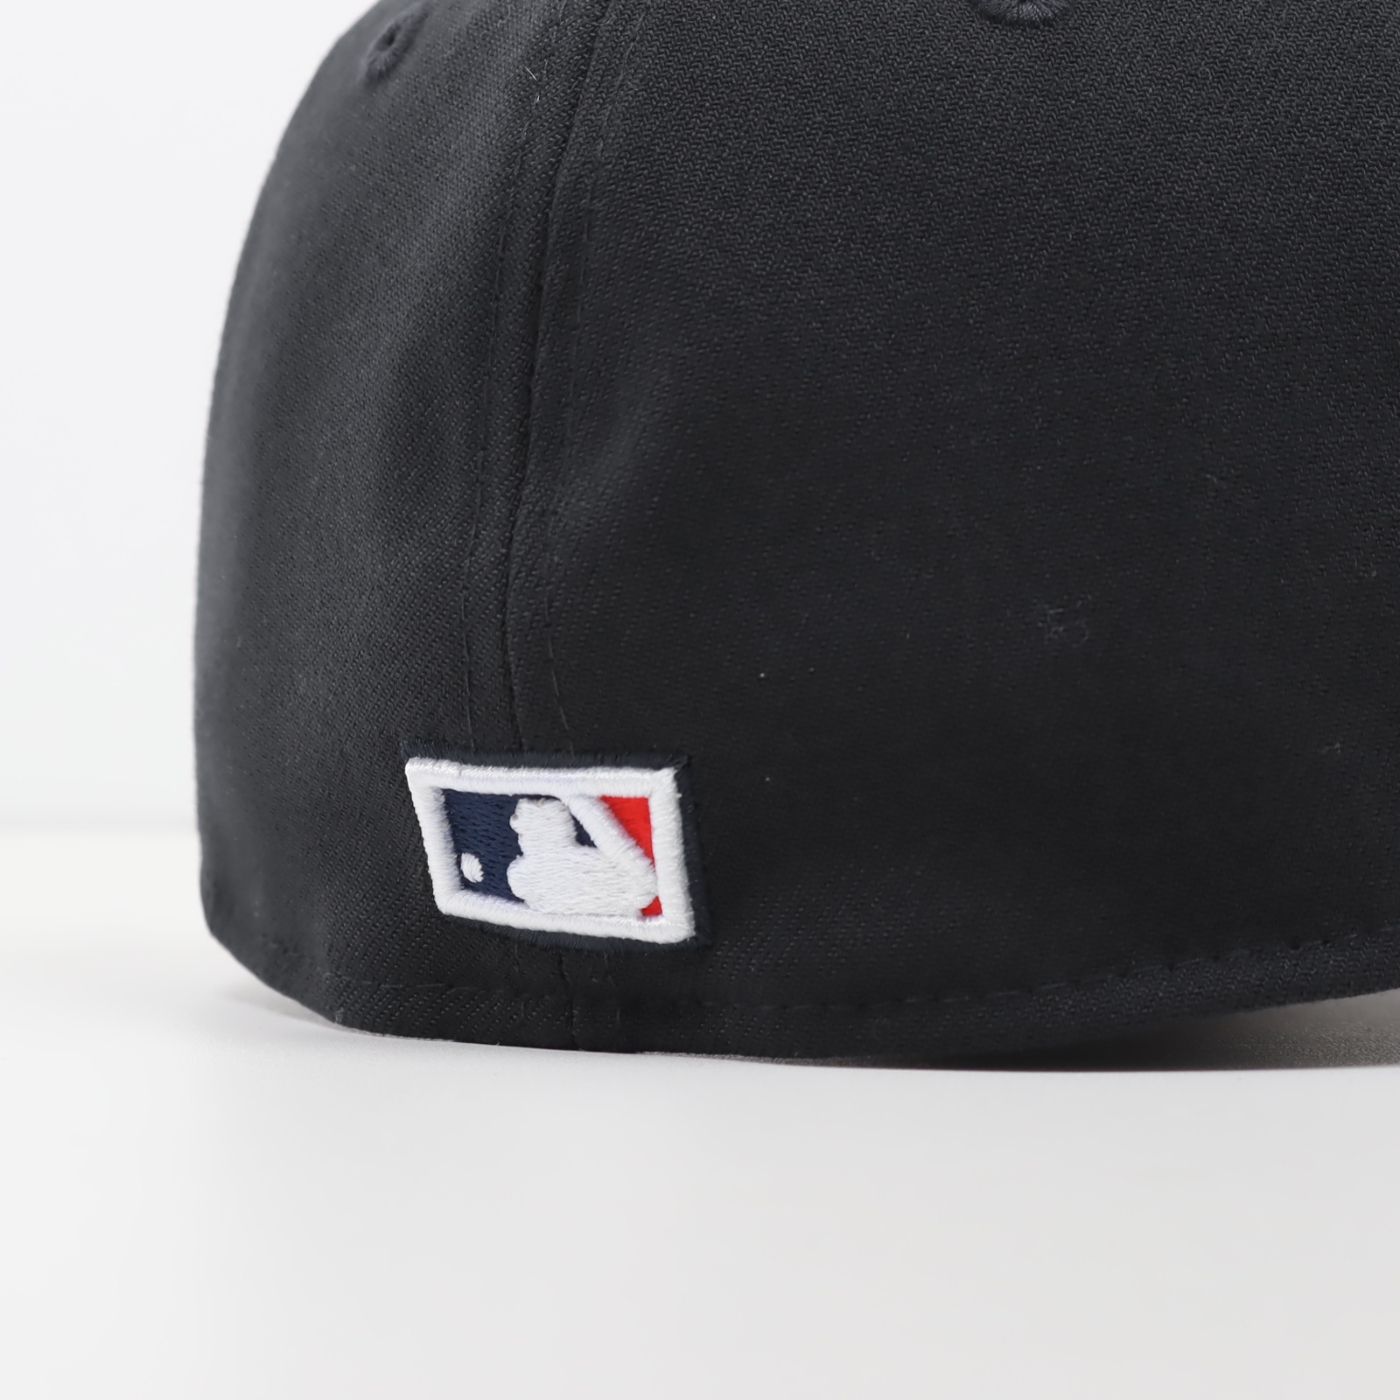 New Era 棒球帽AF Cooperstown MLB 藍紅3930帽型全封式波士頓紅襪BOS 